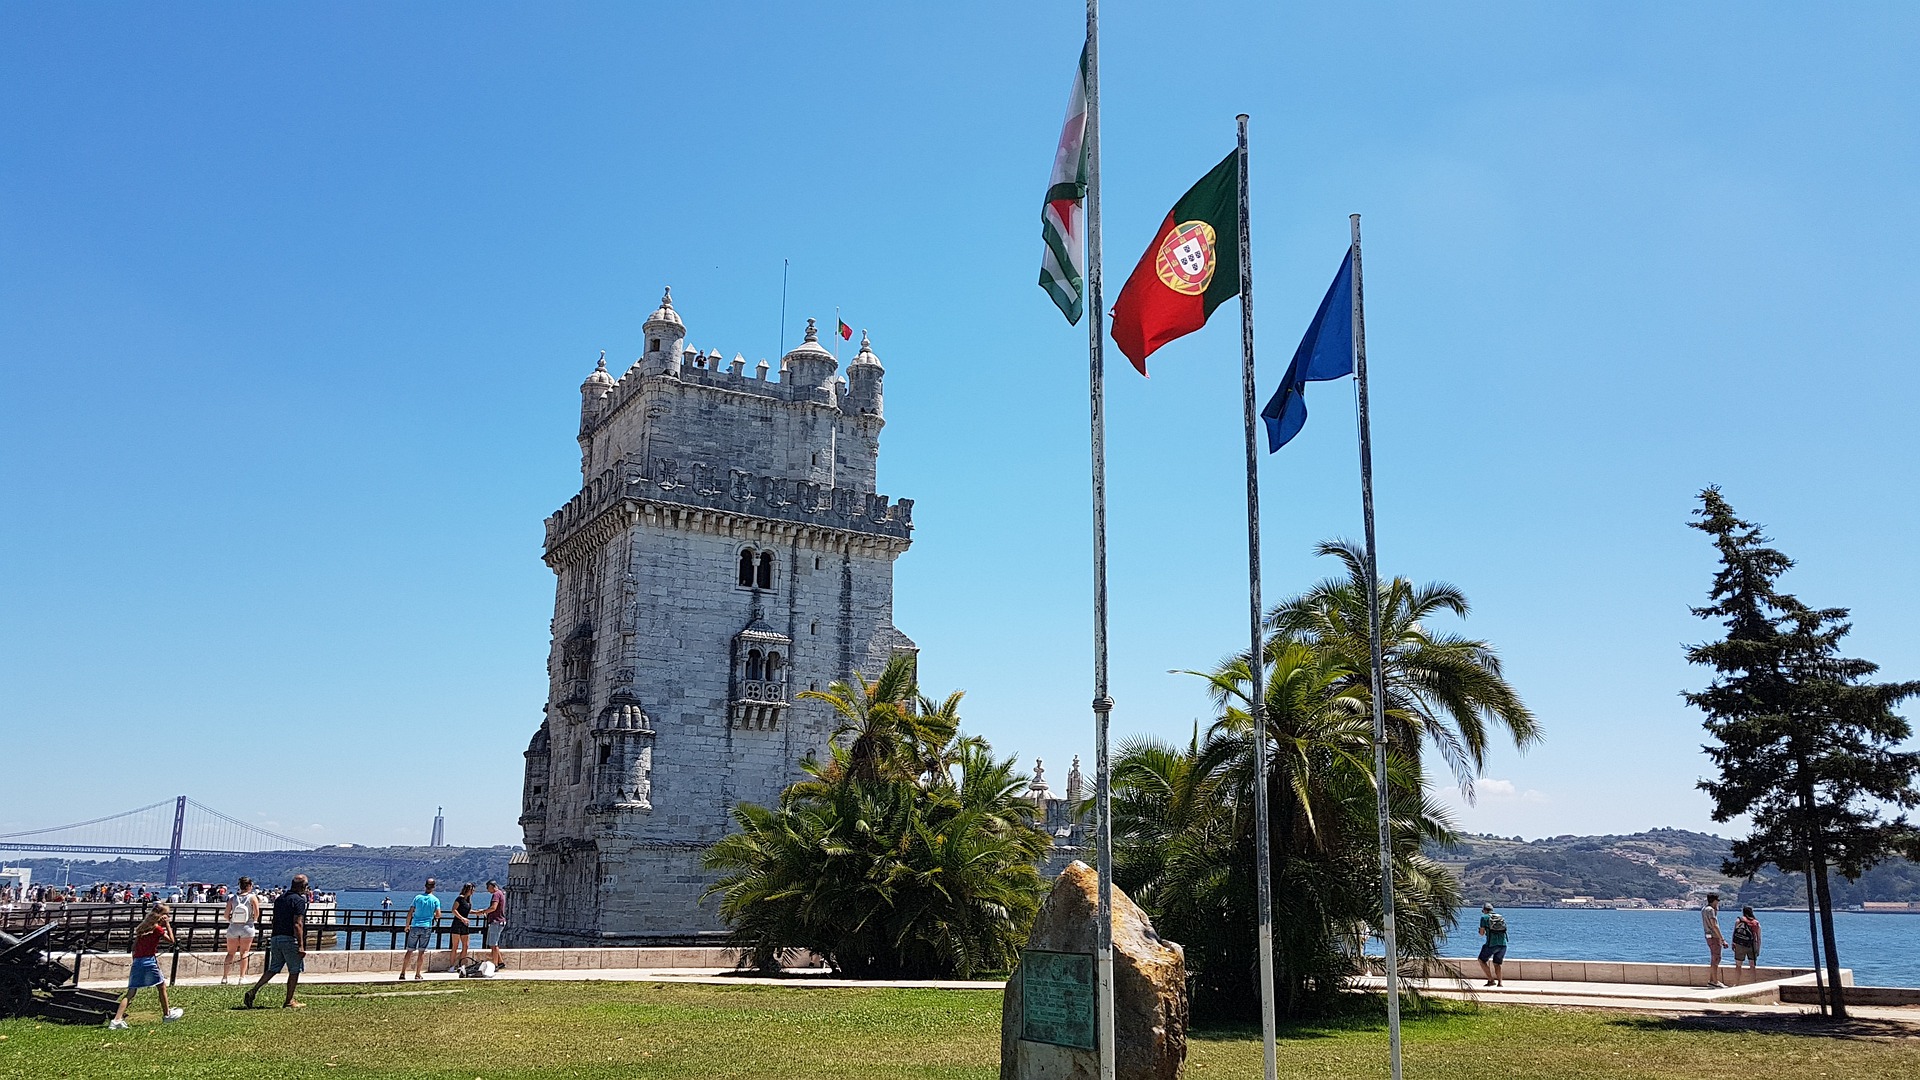 Portugal (version deux semaines)